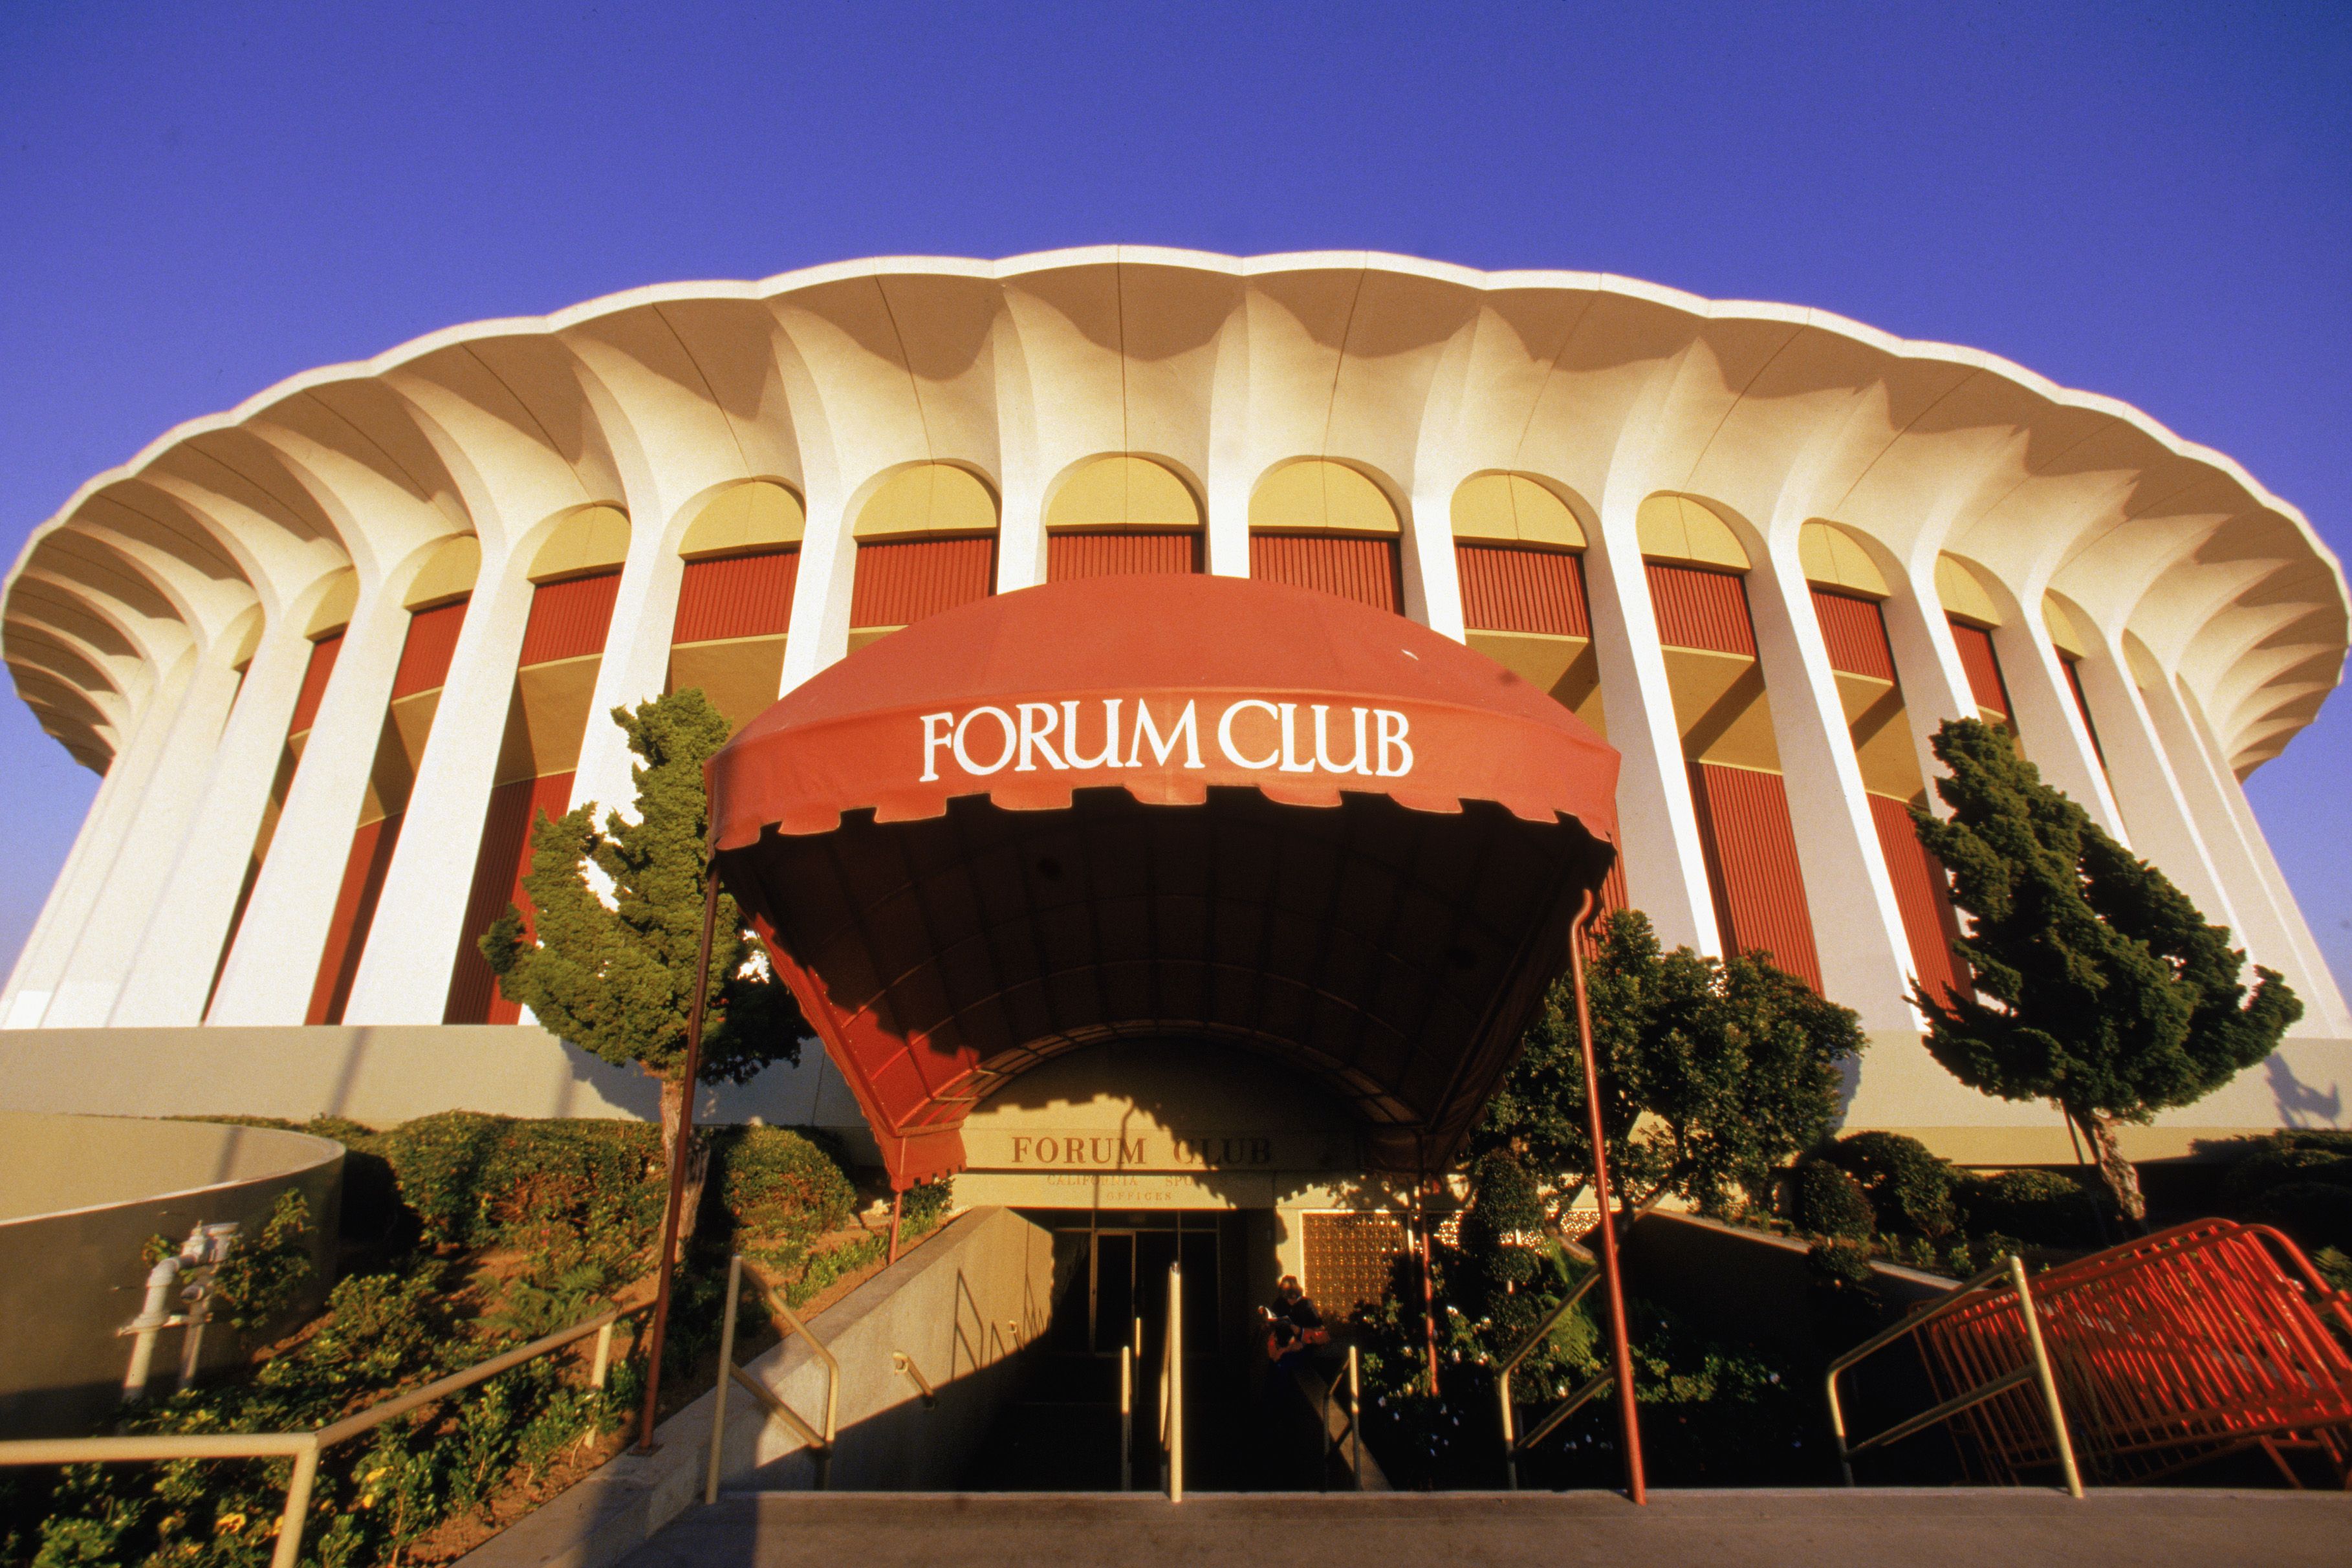 The Forum Club entrance